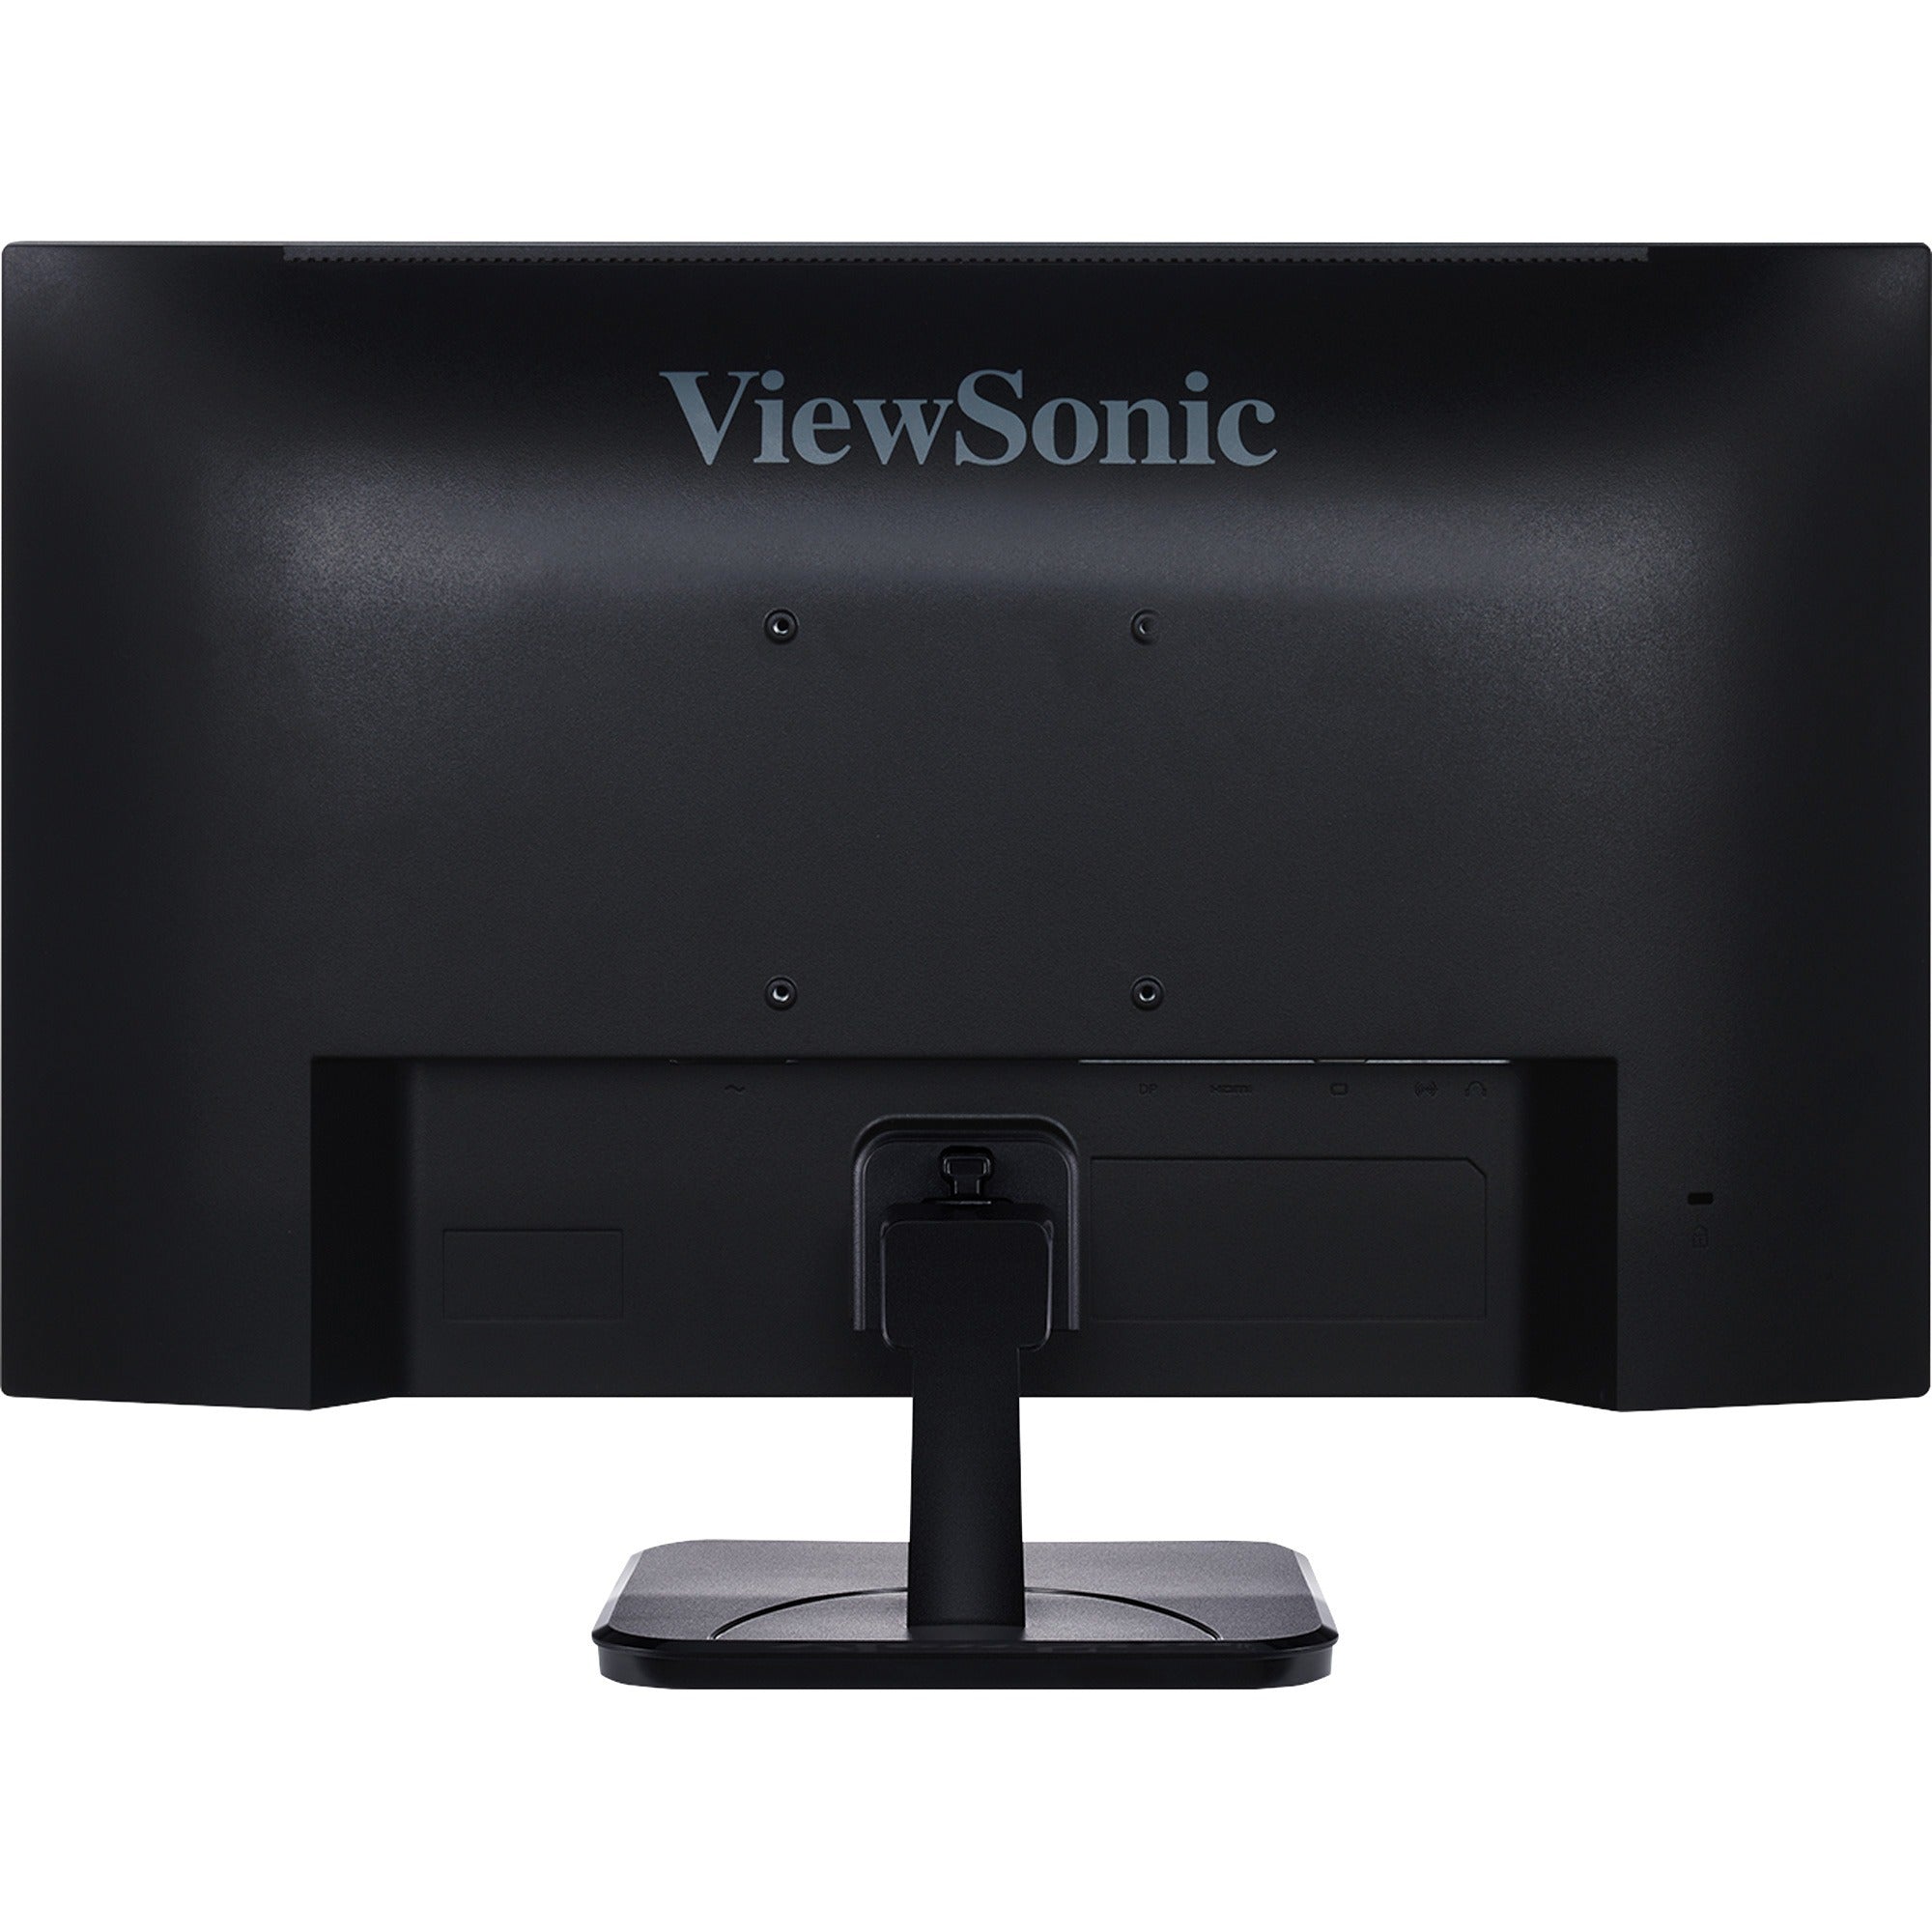 viewsonic-va2456-mhd-24-inch-ips-1080p-monitor-with-100hz-ultra-thin-bezels-hdmi-displayport-and-vga-inputs-for-home-and-office-va2456-mhd-ips-1080p-monitor-with-100hz-ultra-thin-bezels-hdmi-displayport-and-vga-250-cd-m2-24_vewva2456mhd - 5